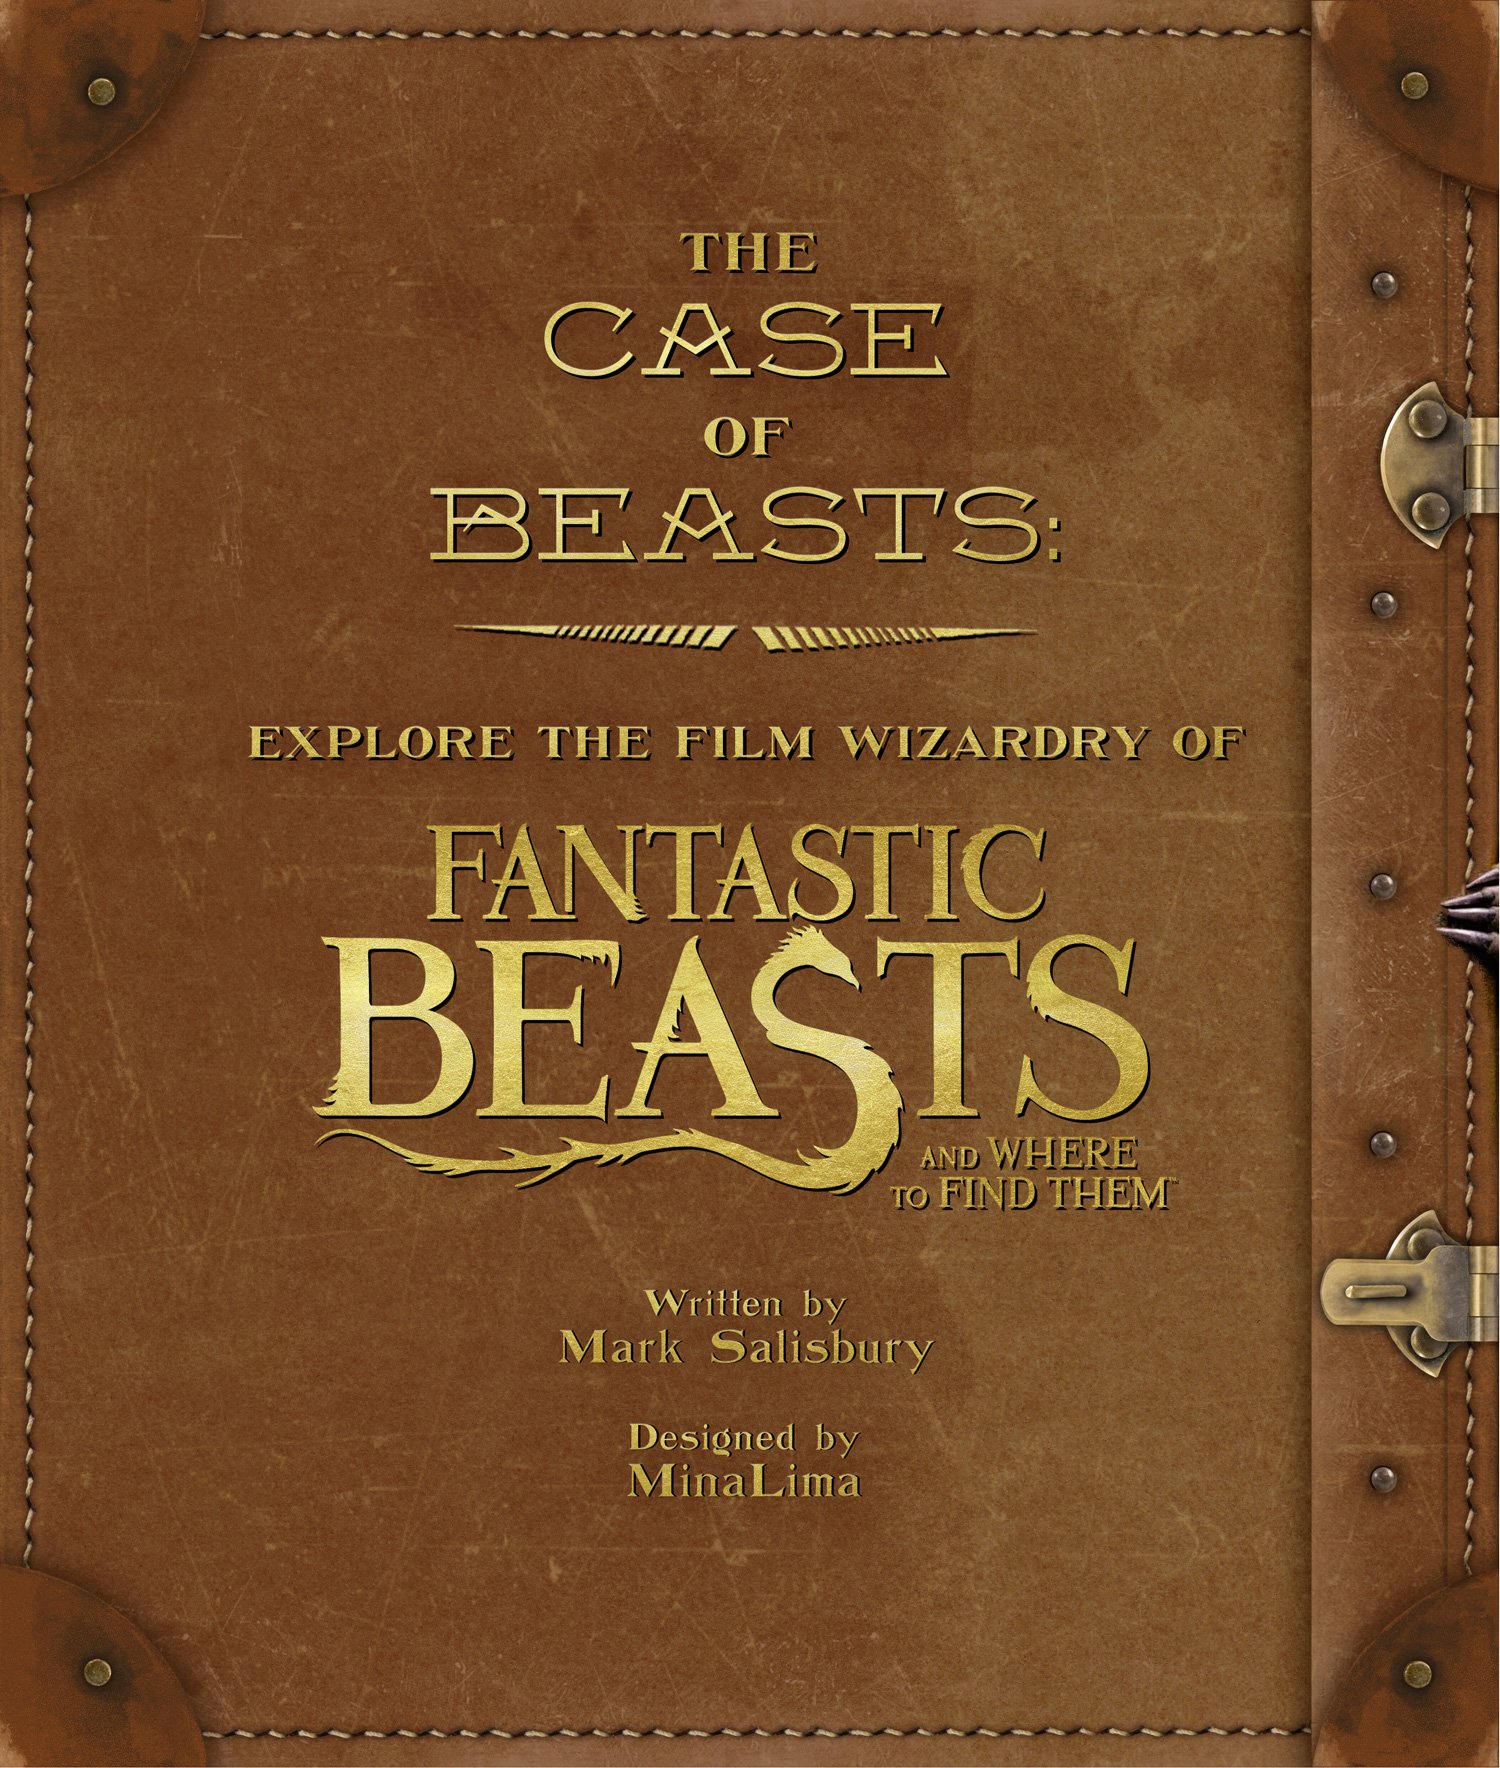 fantastic beasts book